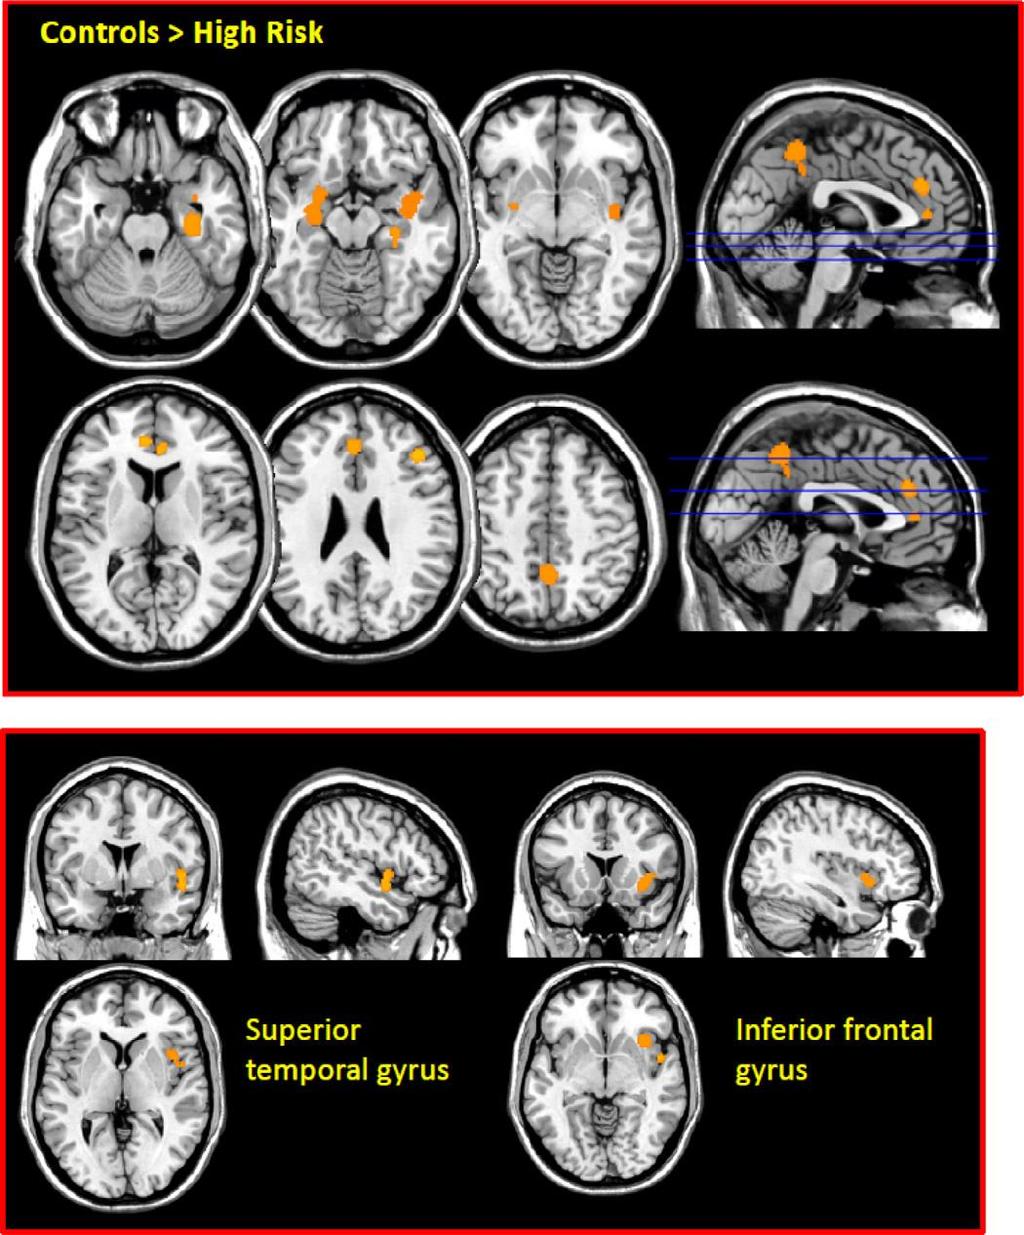 MRI: UHR vs friske- metaanalyse 749 controls, 920 UHR patients Reduced grey